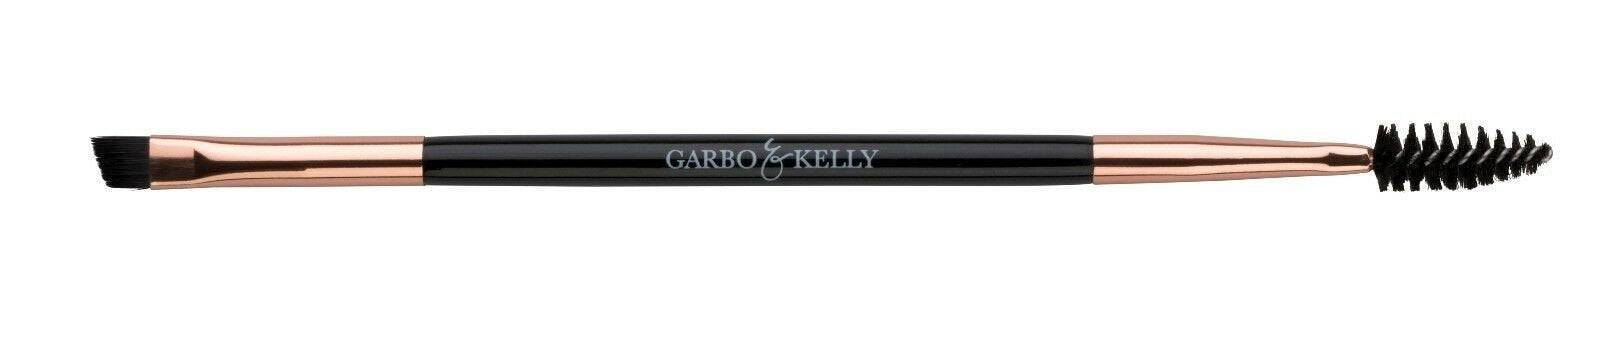 Garbo & Kelly Brow Brush x 1 - On Line Hair Depot